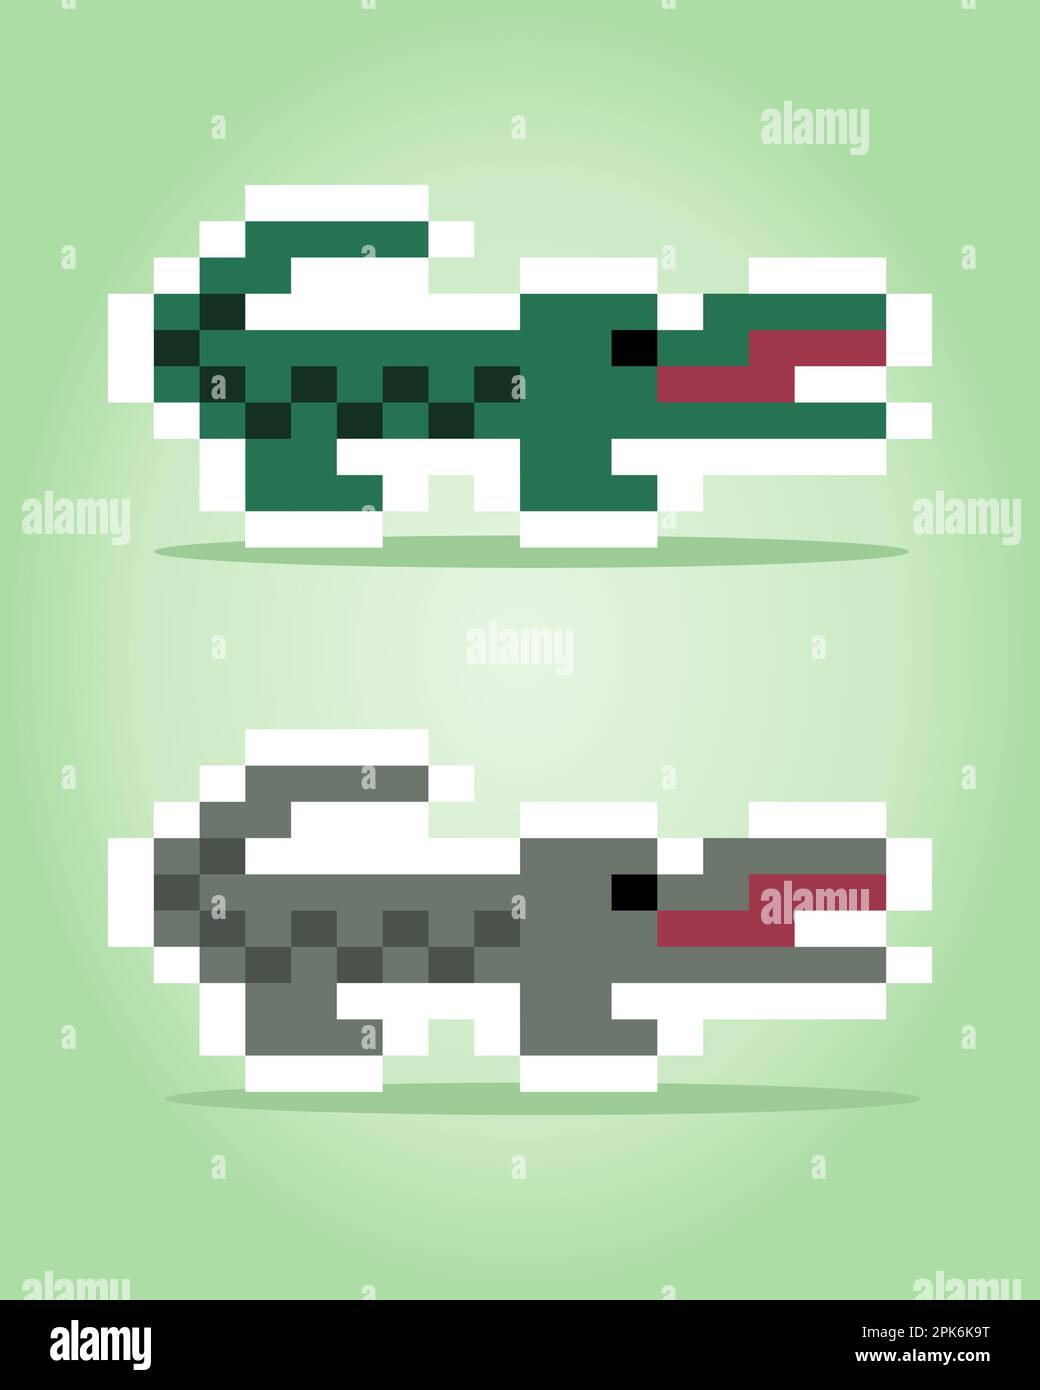 8 bit pixel crocodile image. Animals in vector illustration for retro games Stock Vector